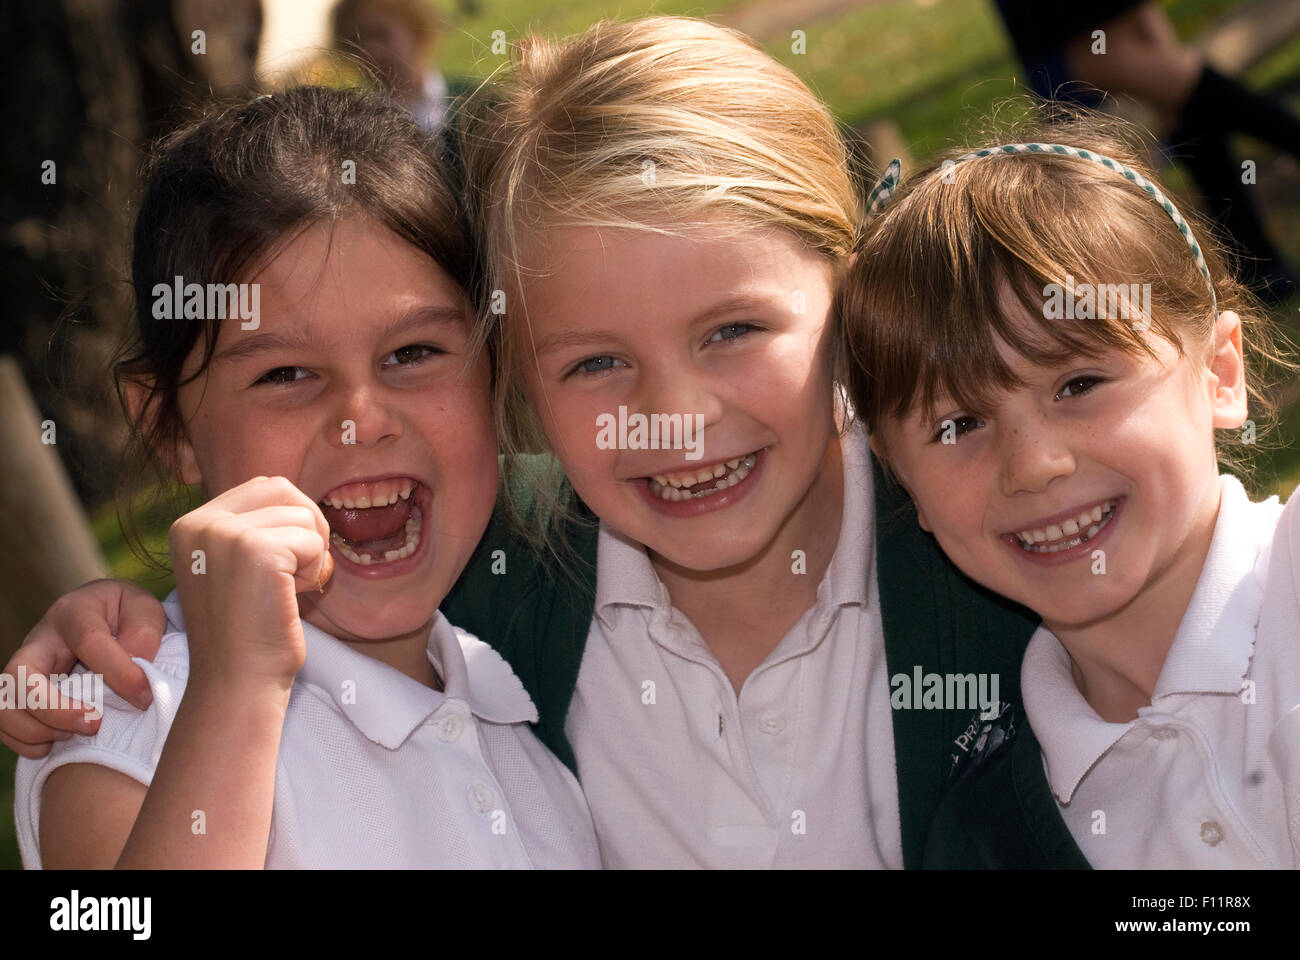 Primary school pupils having fun in playground, UK. Stock Photo